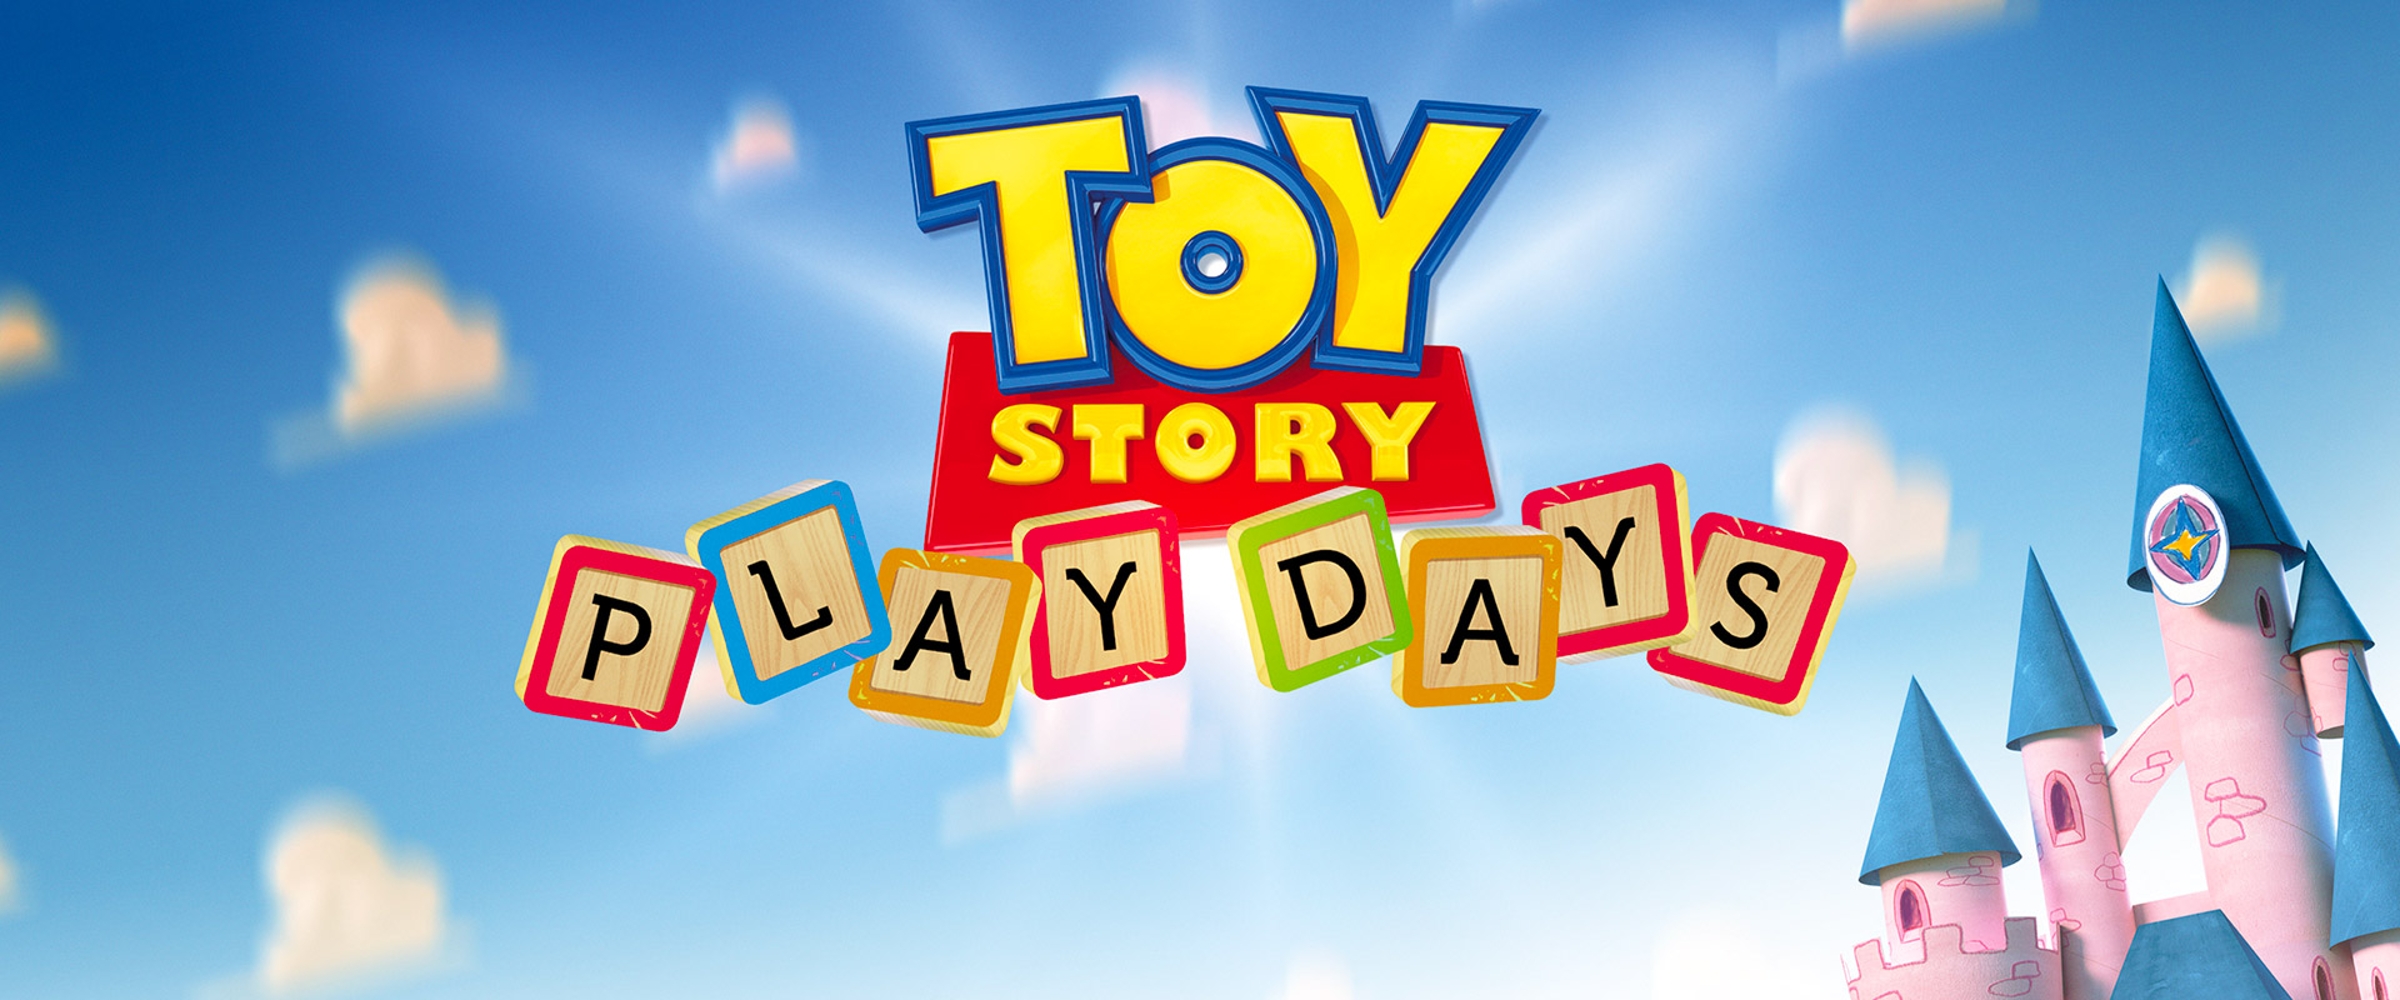 hd14668_2020jun30_world_toy-story-play-days-logo_5-2_tcm808-190541$w~2400$c~1.0$p~1.jpg